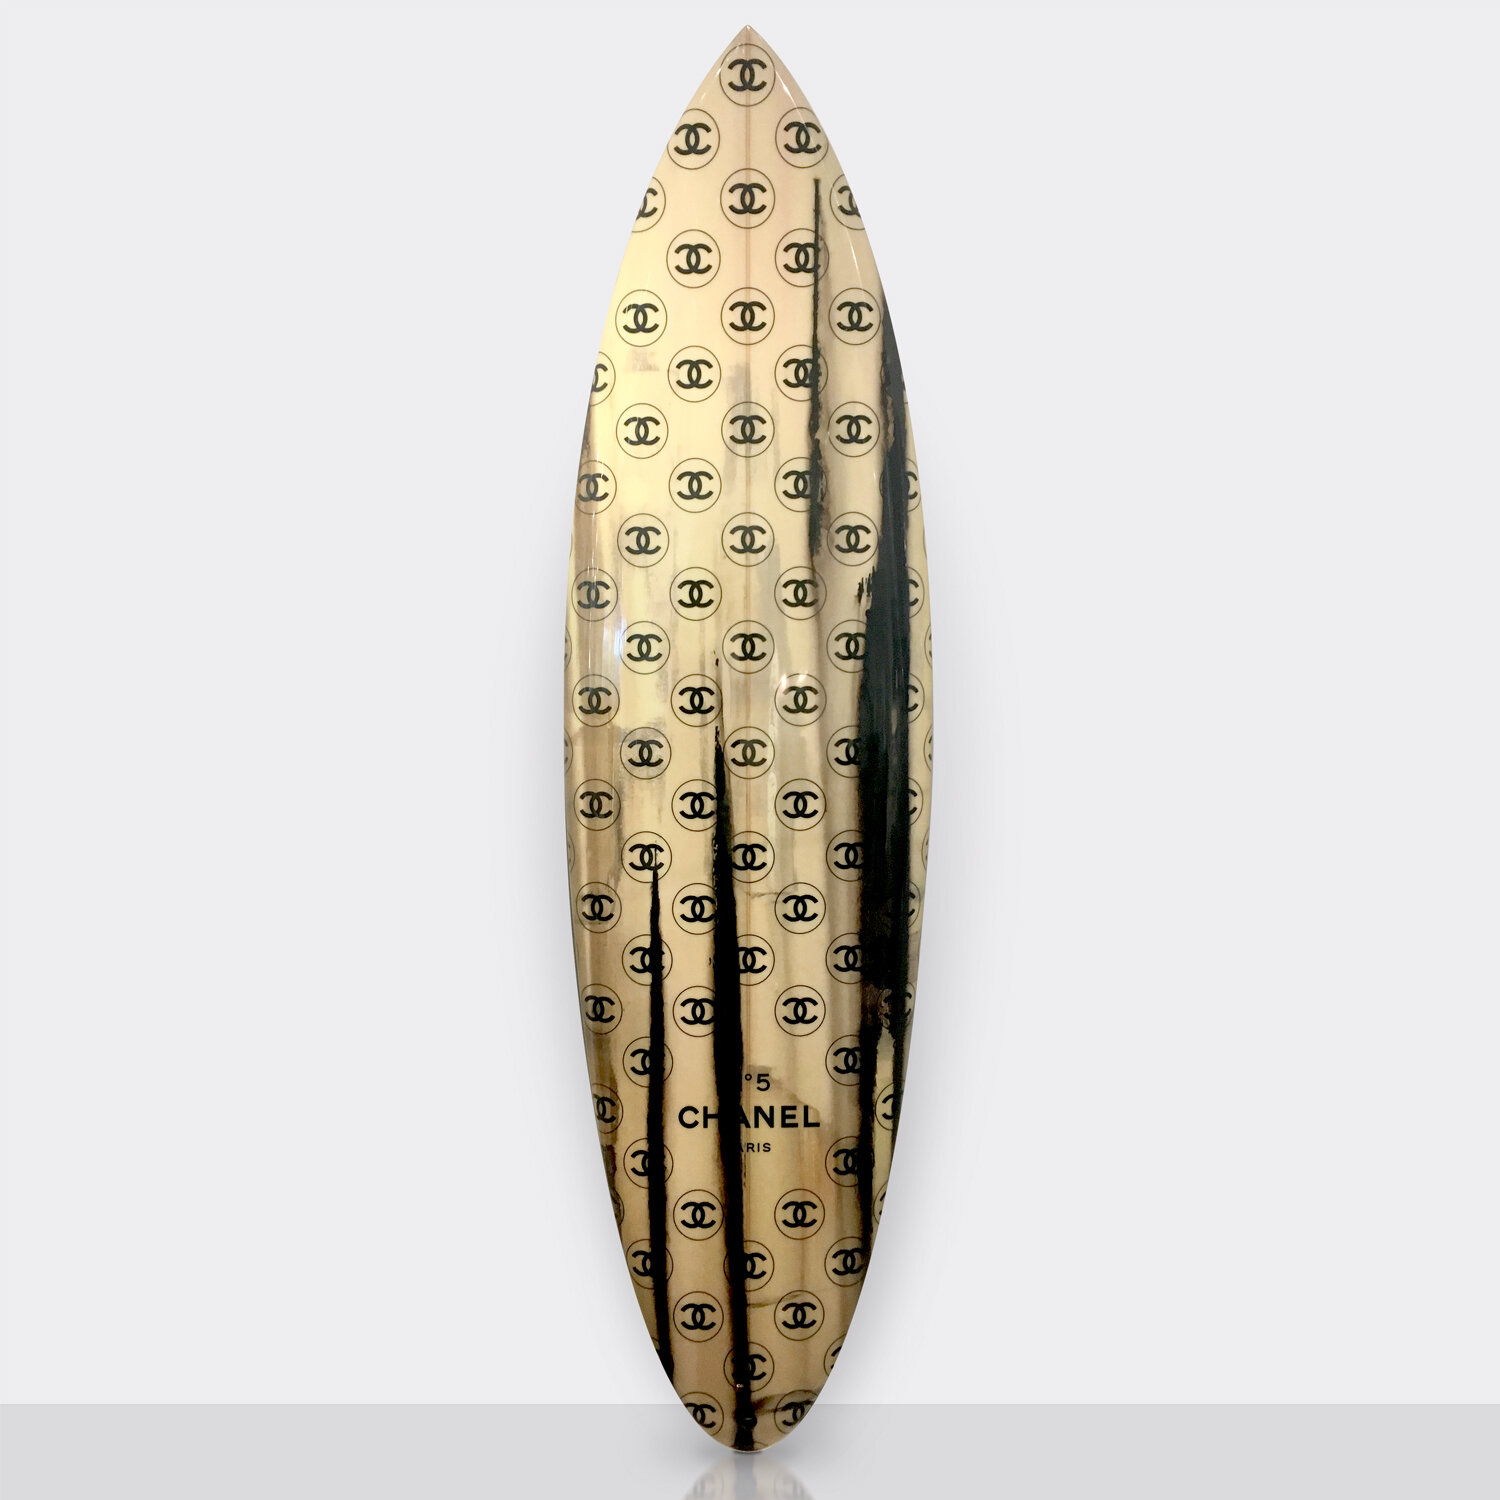  Composite custom Channel Surfboard image using Photoshop, artist: Erik Skoldberg 